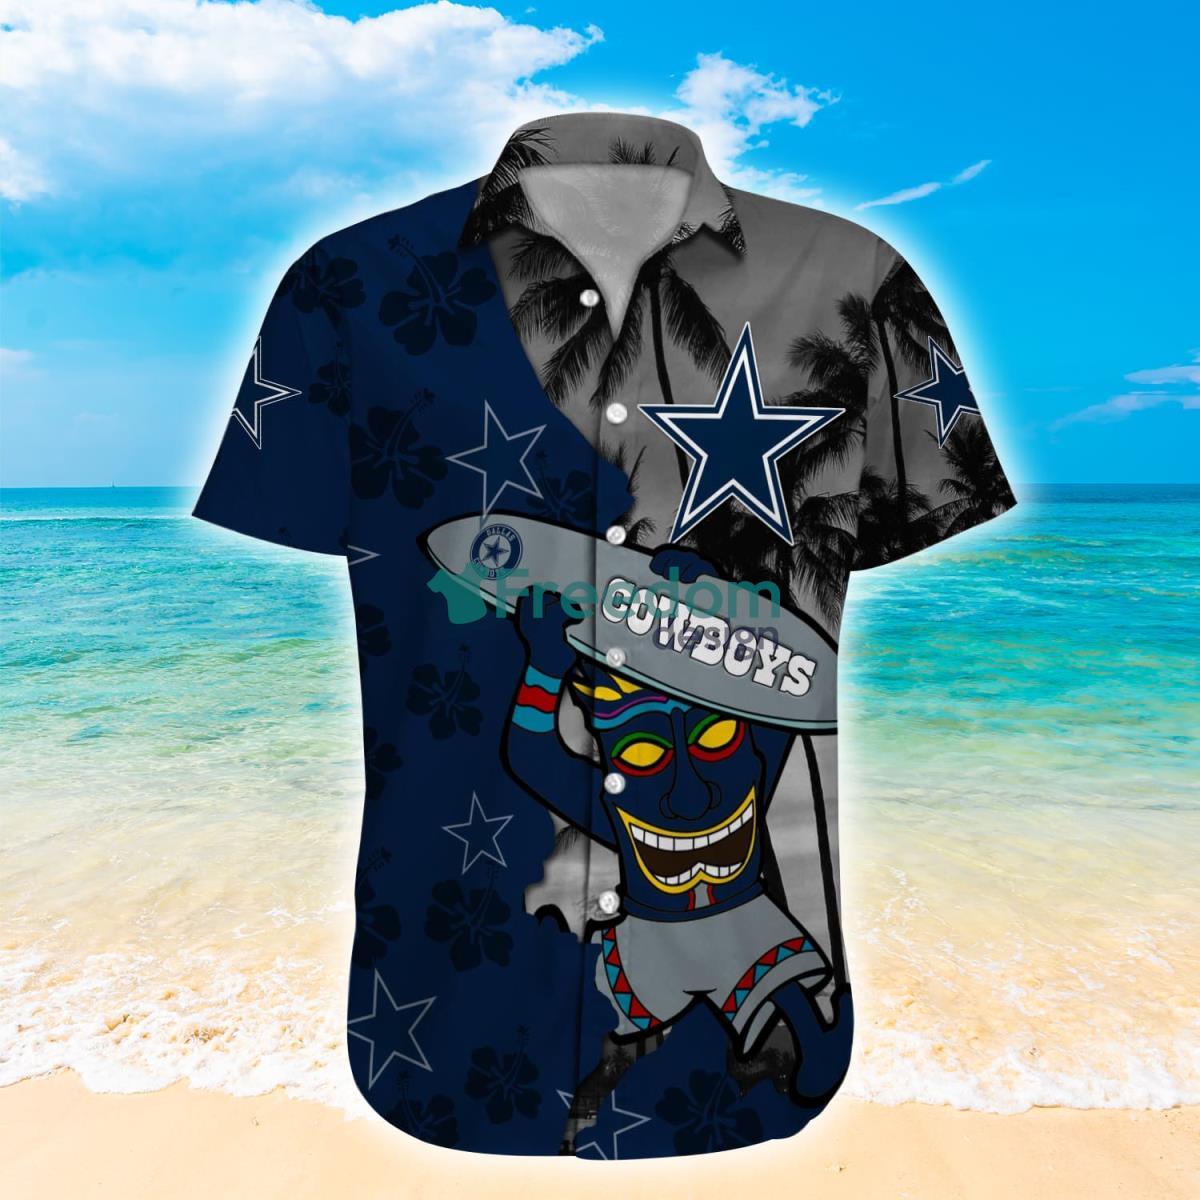 Dallas Cowboys Shirt Designs 